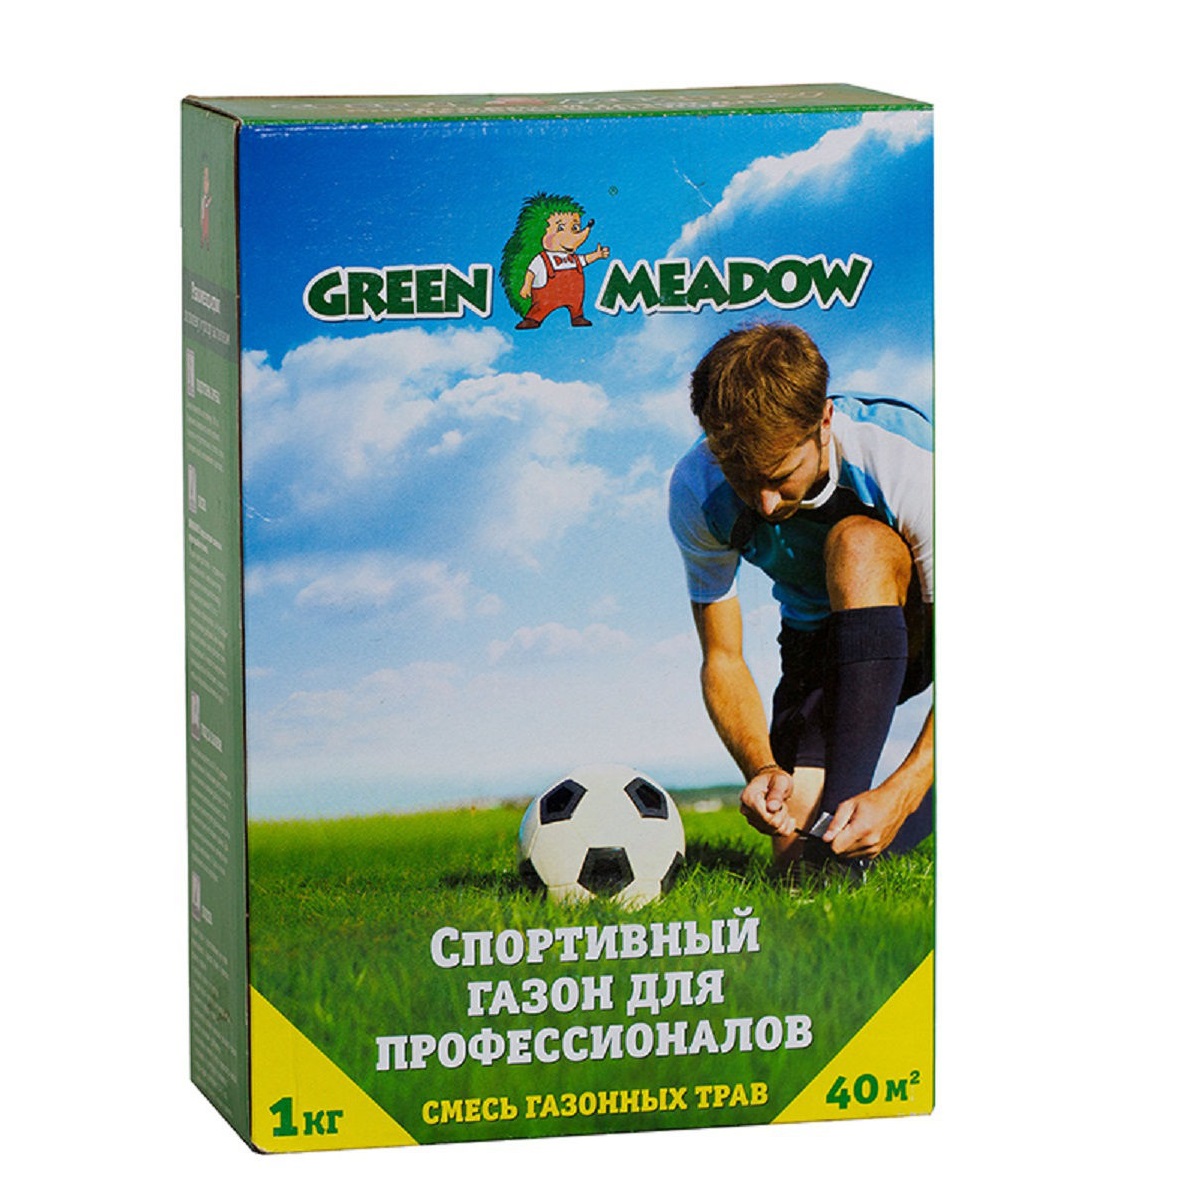 Газон Green Meadow спорт для профессионалов 1 кг газон green meadow детский парк мягкий 2 кг